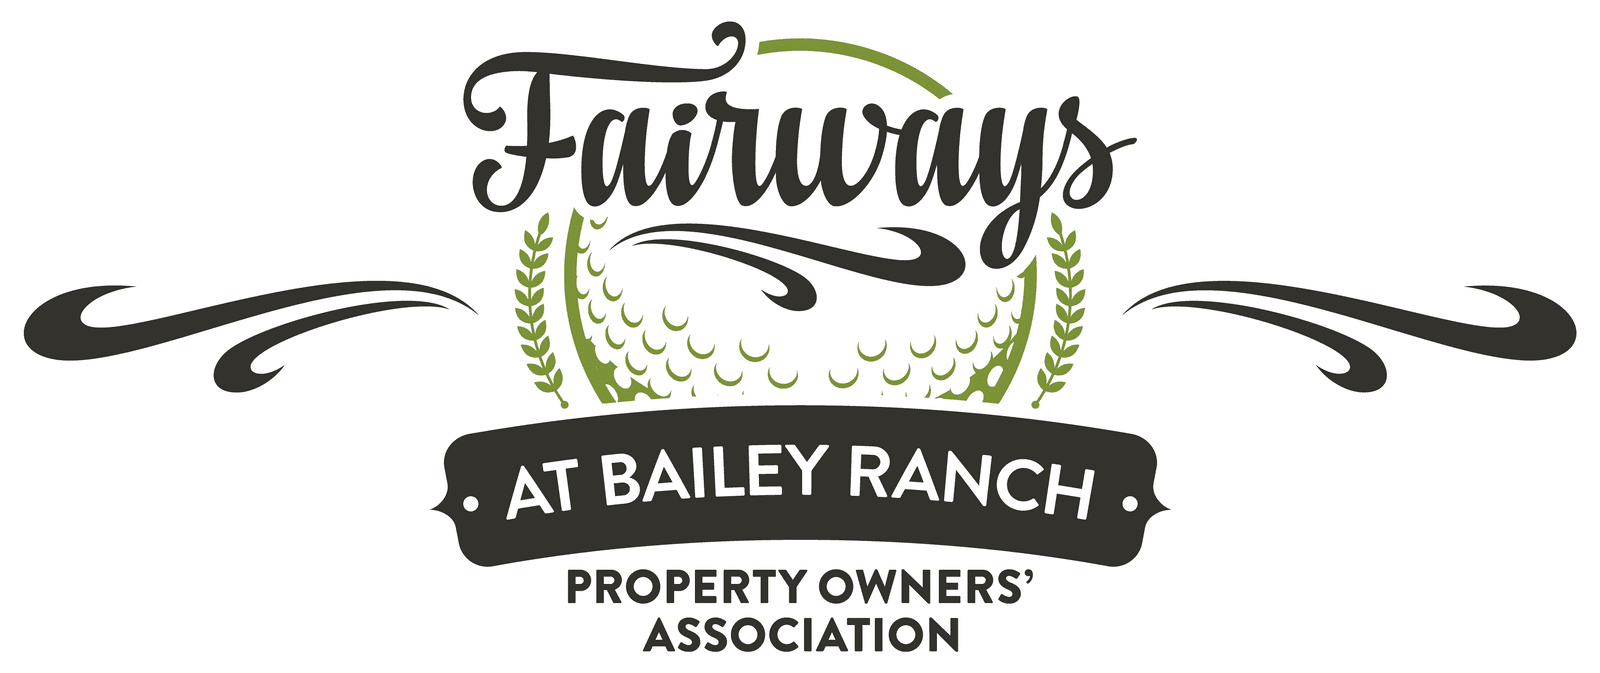 Fairways at Bailey Ranch